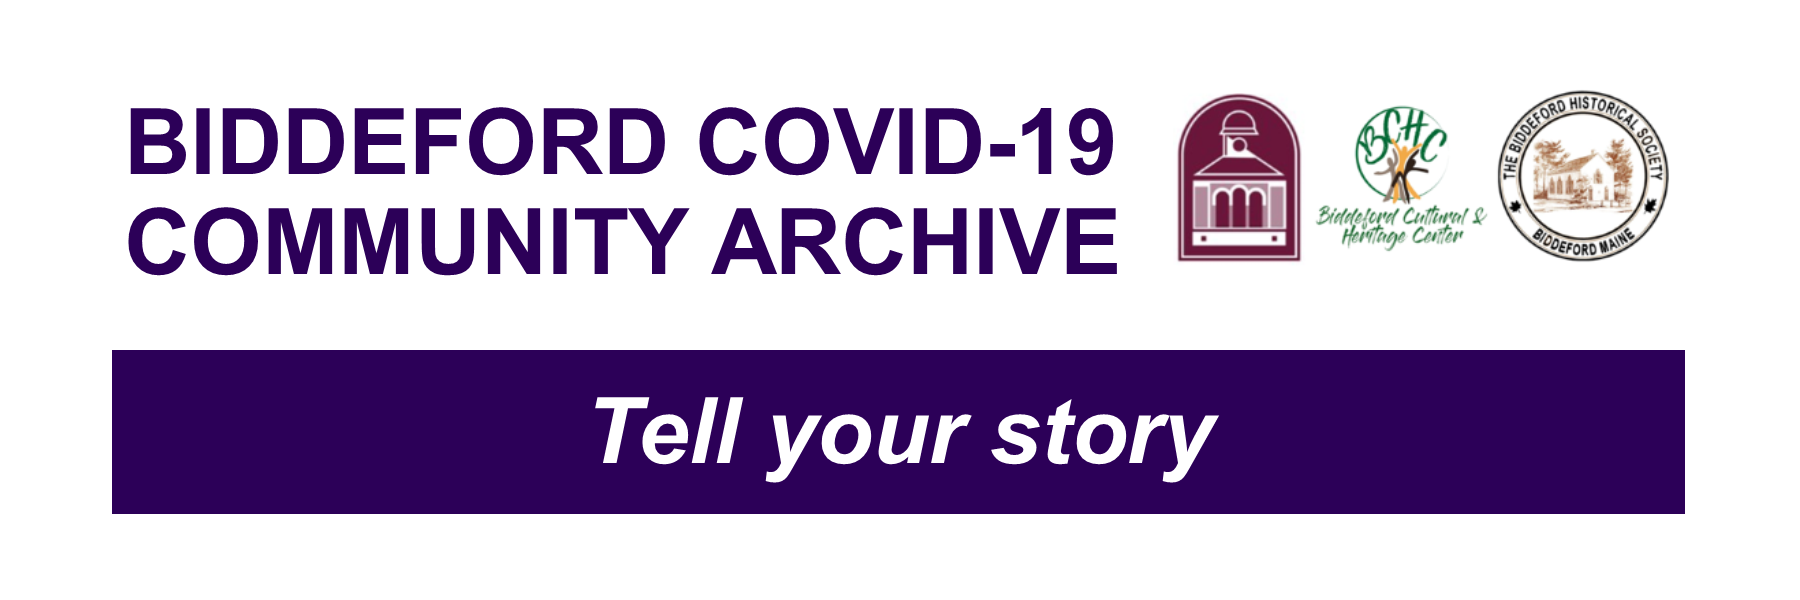 Biddeford Covid-19 Community Archive